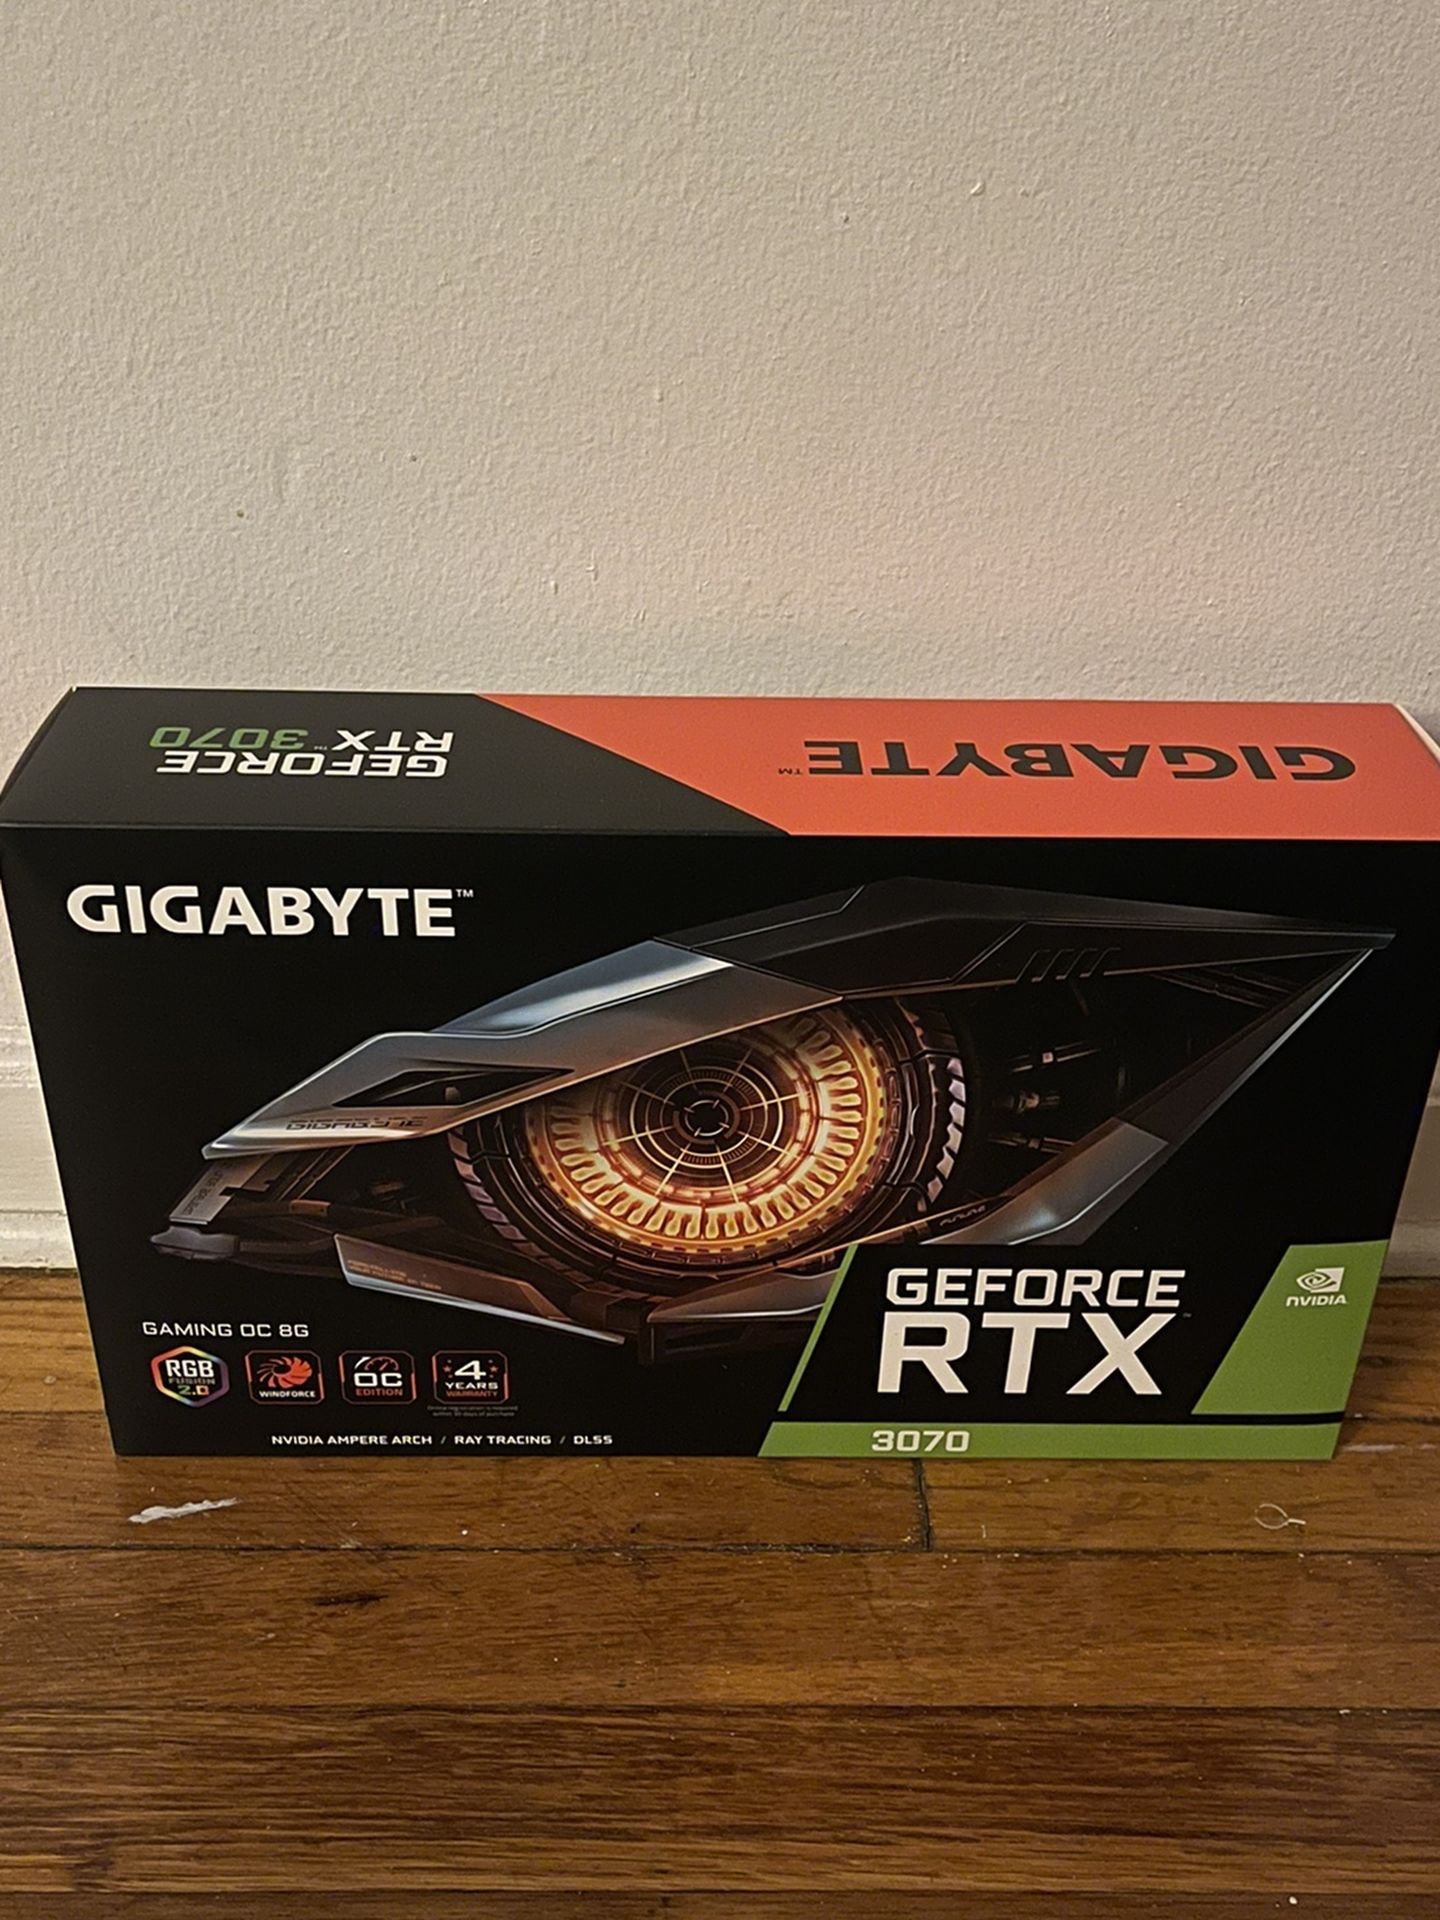 Gigabyte GeForce RTX 3070 Gaming OC Graphics Card (OR BEST OFFER)